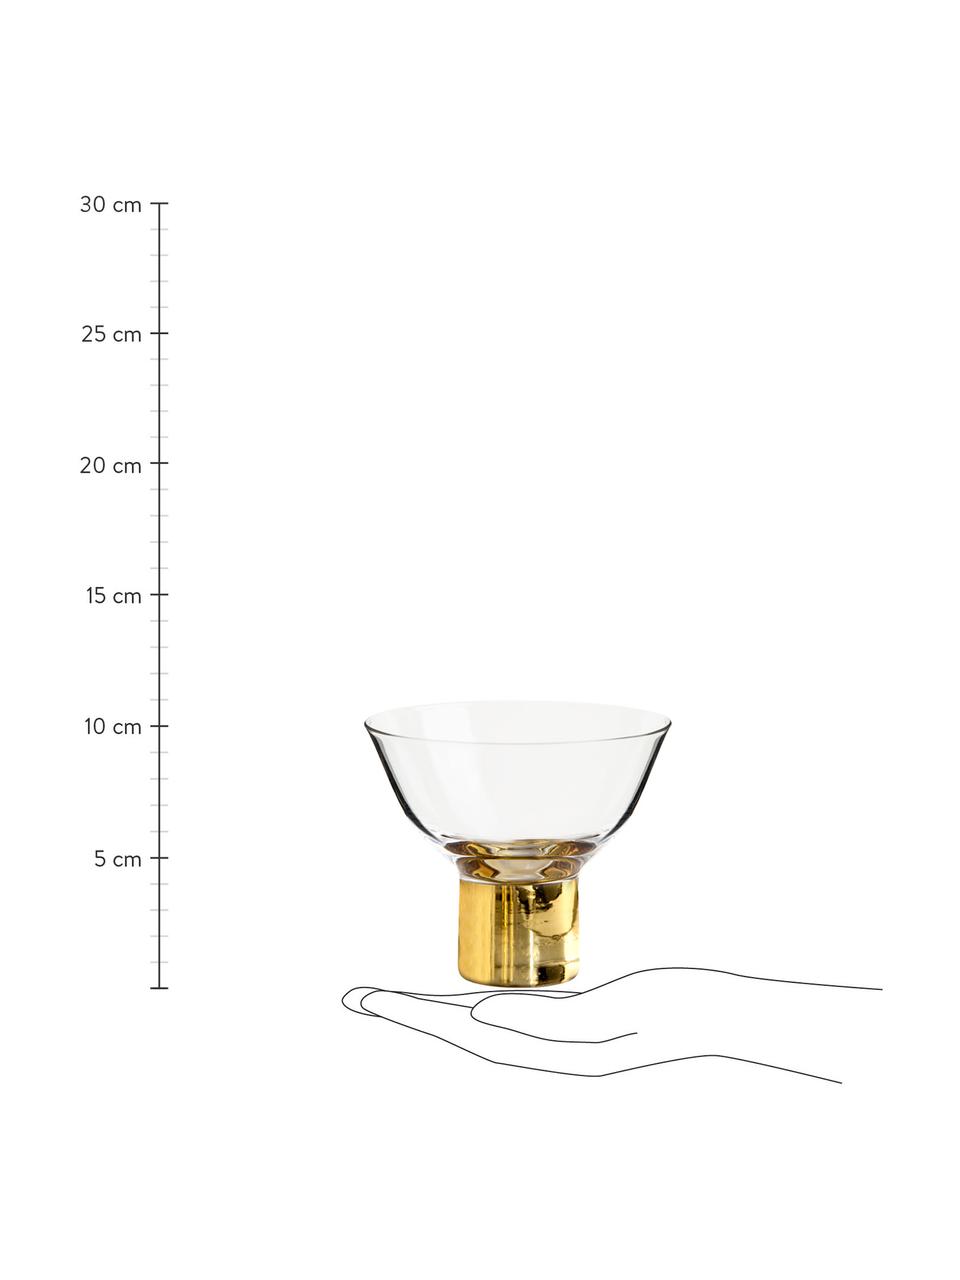 Bicchiere cocktail trasparente/dorato Club 2 pz, Vetro soffiato, Trasparente, dorato, Ø 10 x Alt. 9 cm